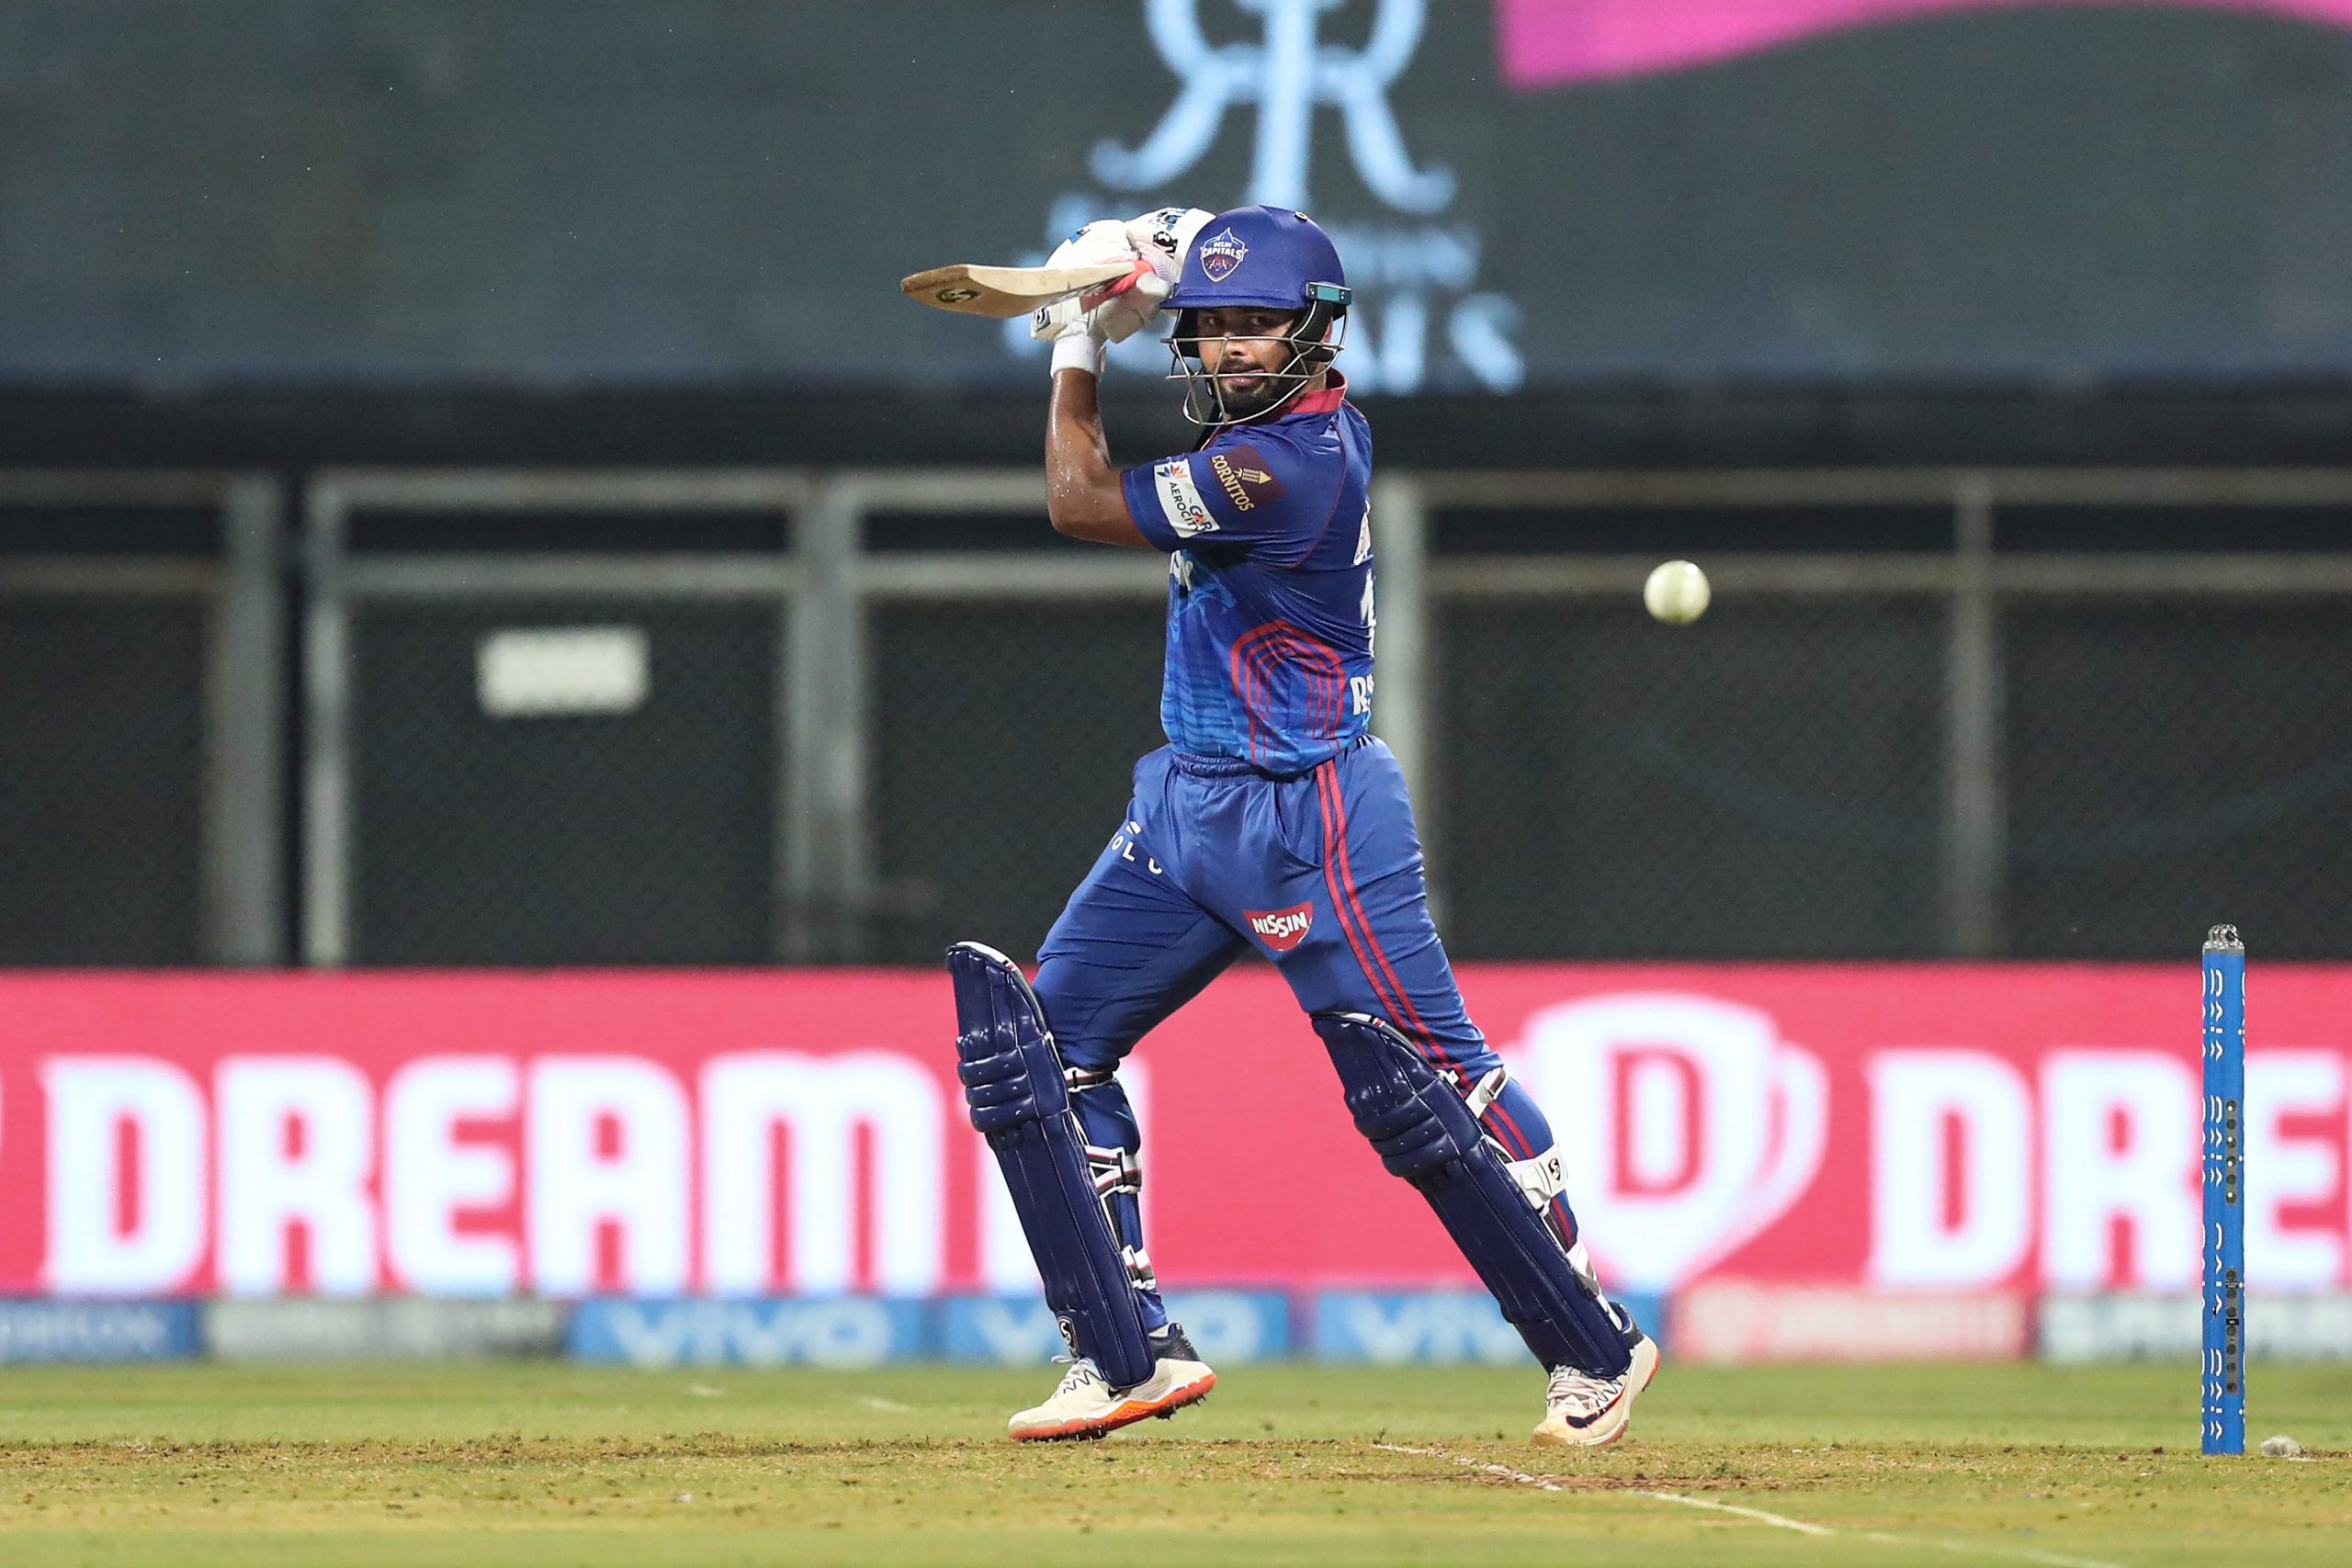 WATCH | Rishabh Pant misses comical run-out chance against Rajasthan